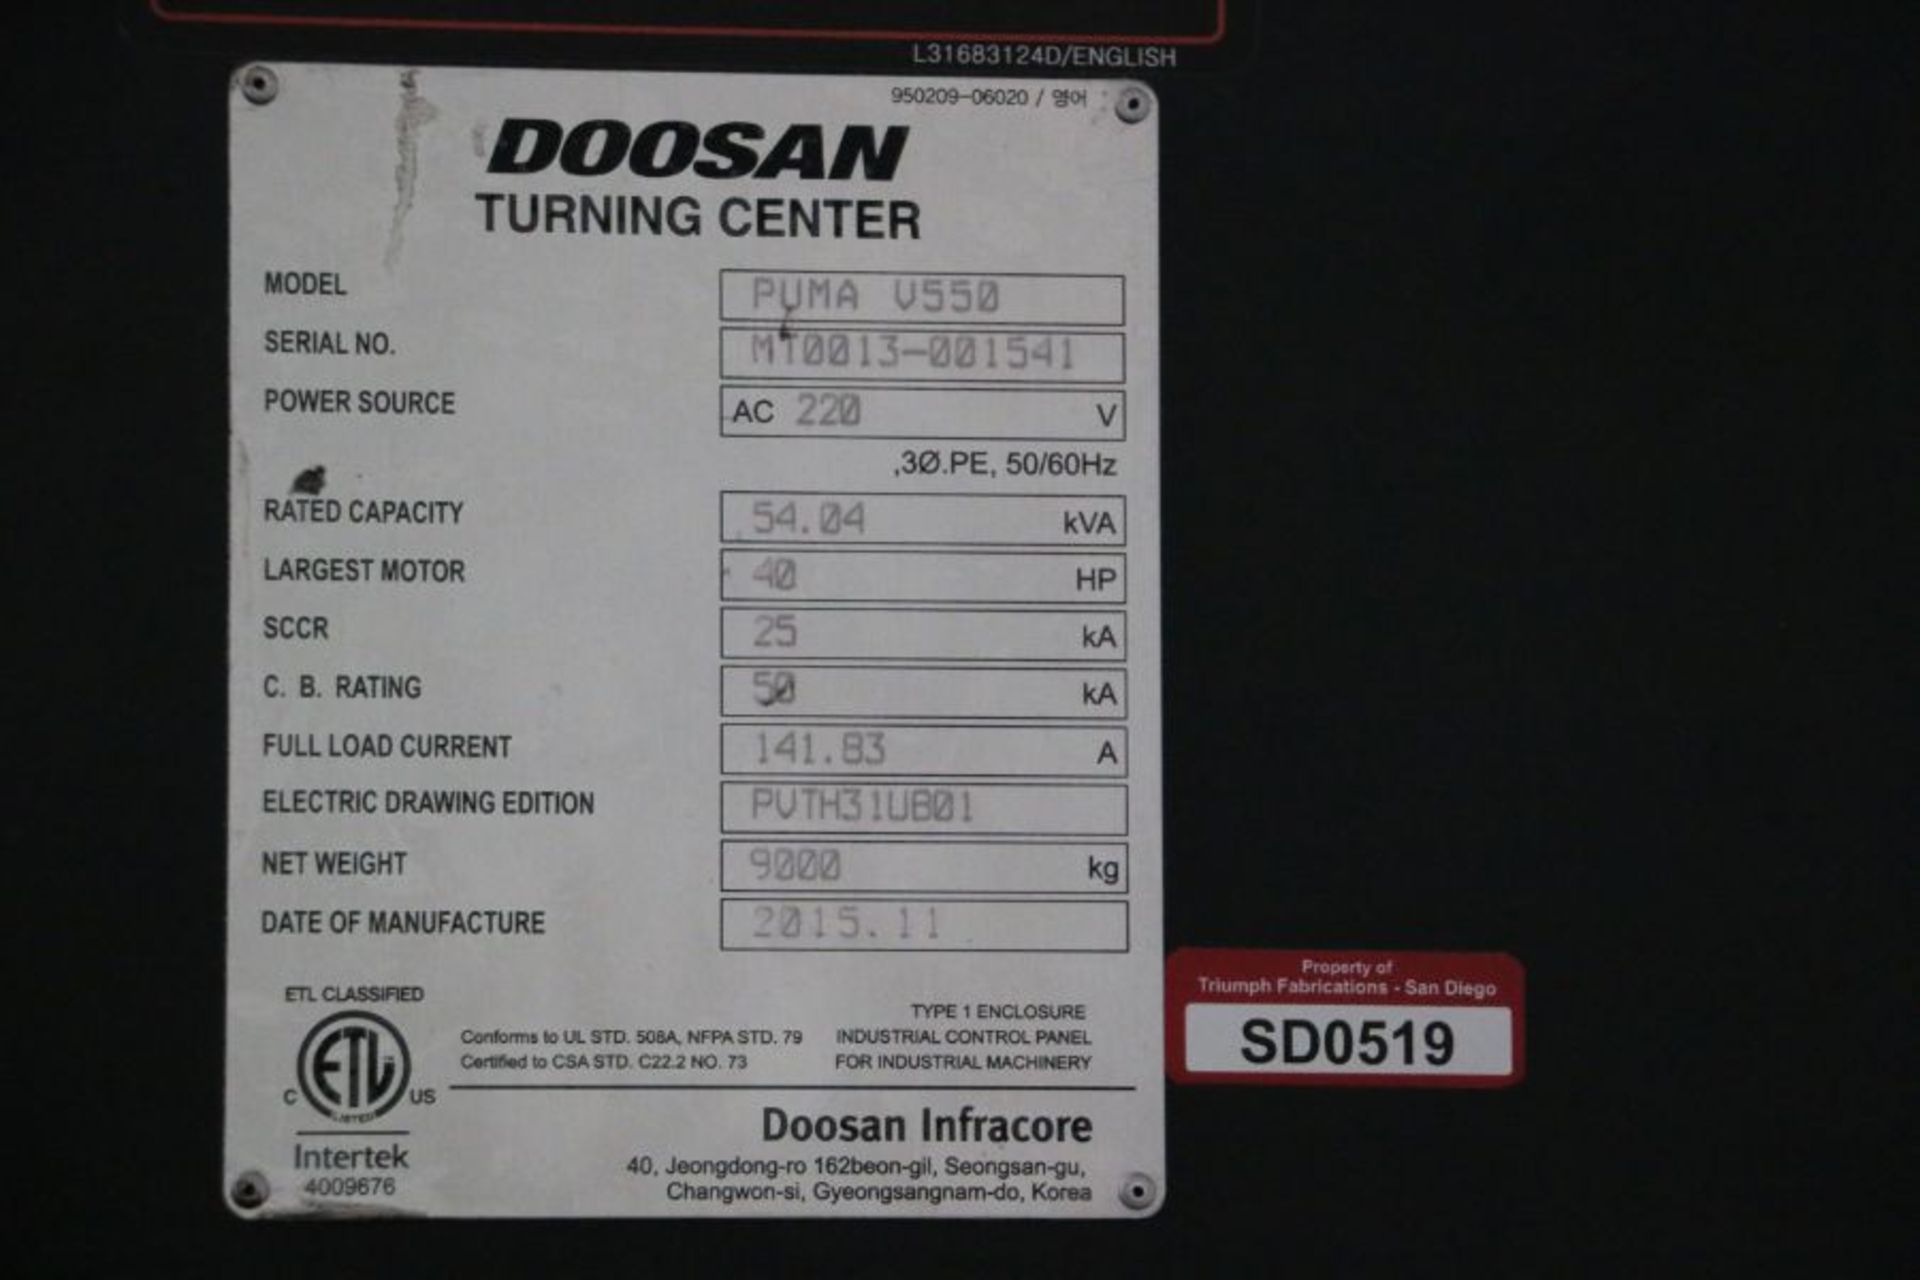 Doosan Puma VT550 CNC Vertical Turning Center, Fanuc I control, 24" Chuck, 12 Position Turret, - Image 13 of 16